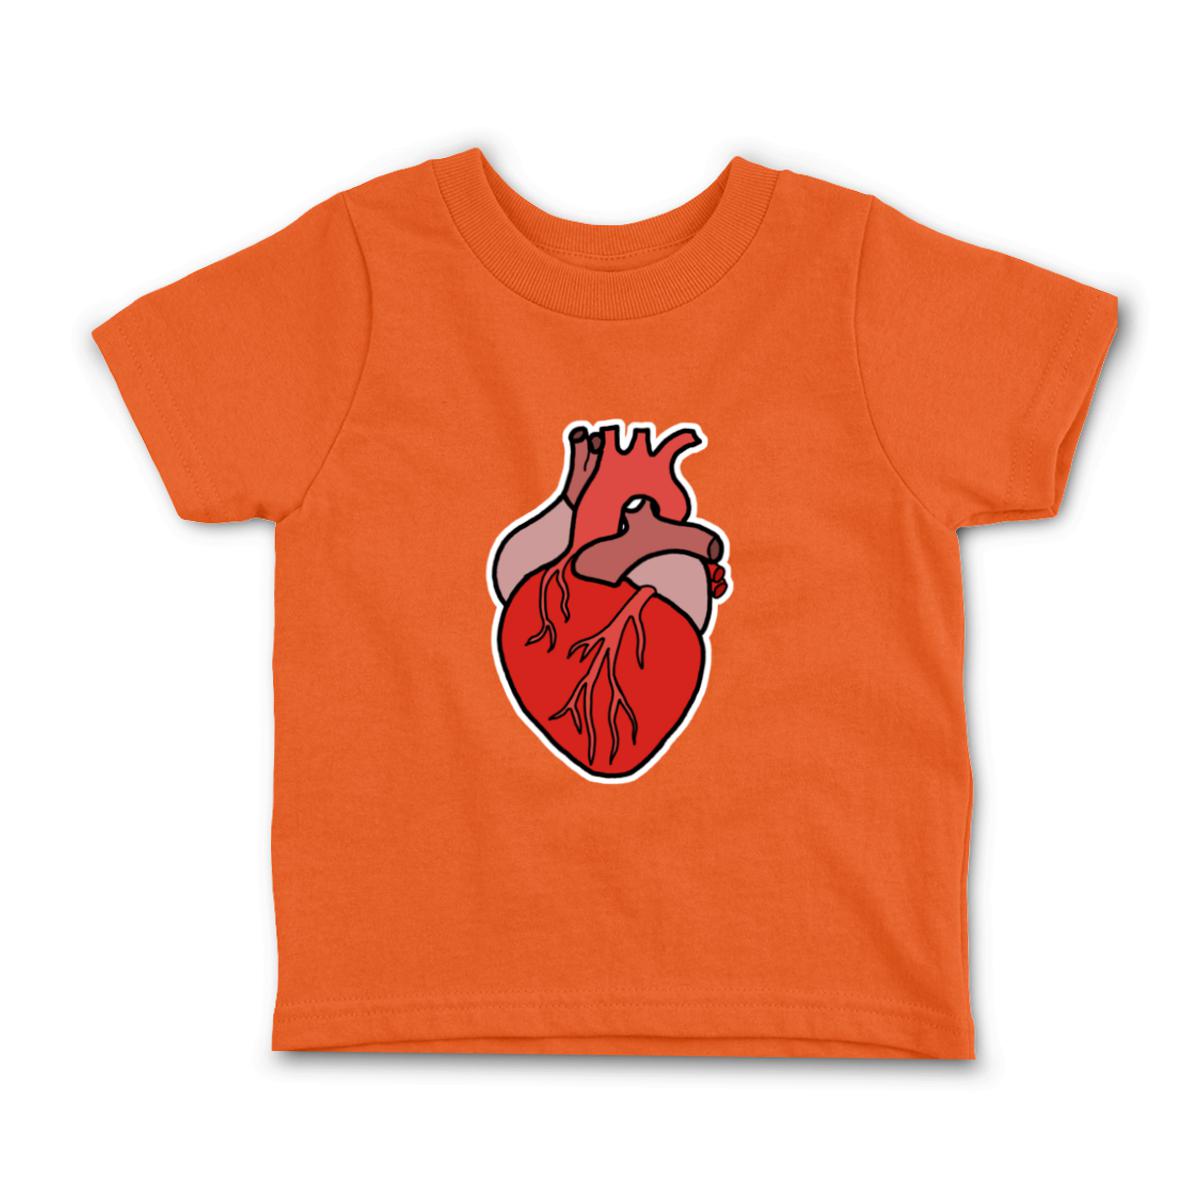 Illustrative Heart Infant Tee 12M orange